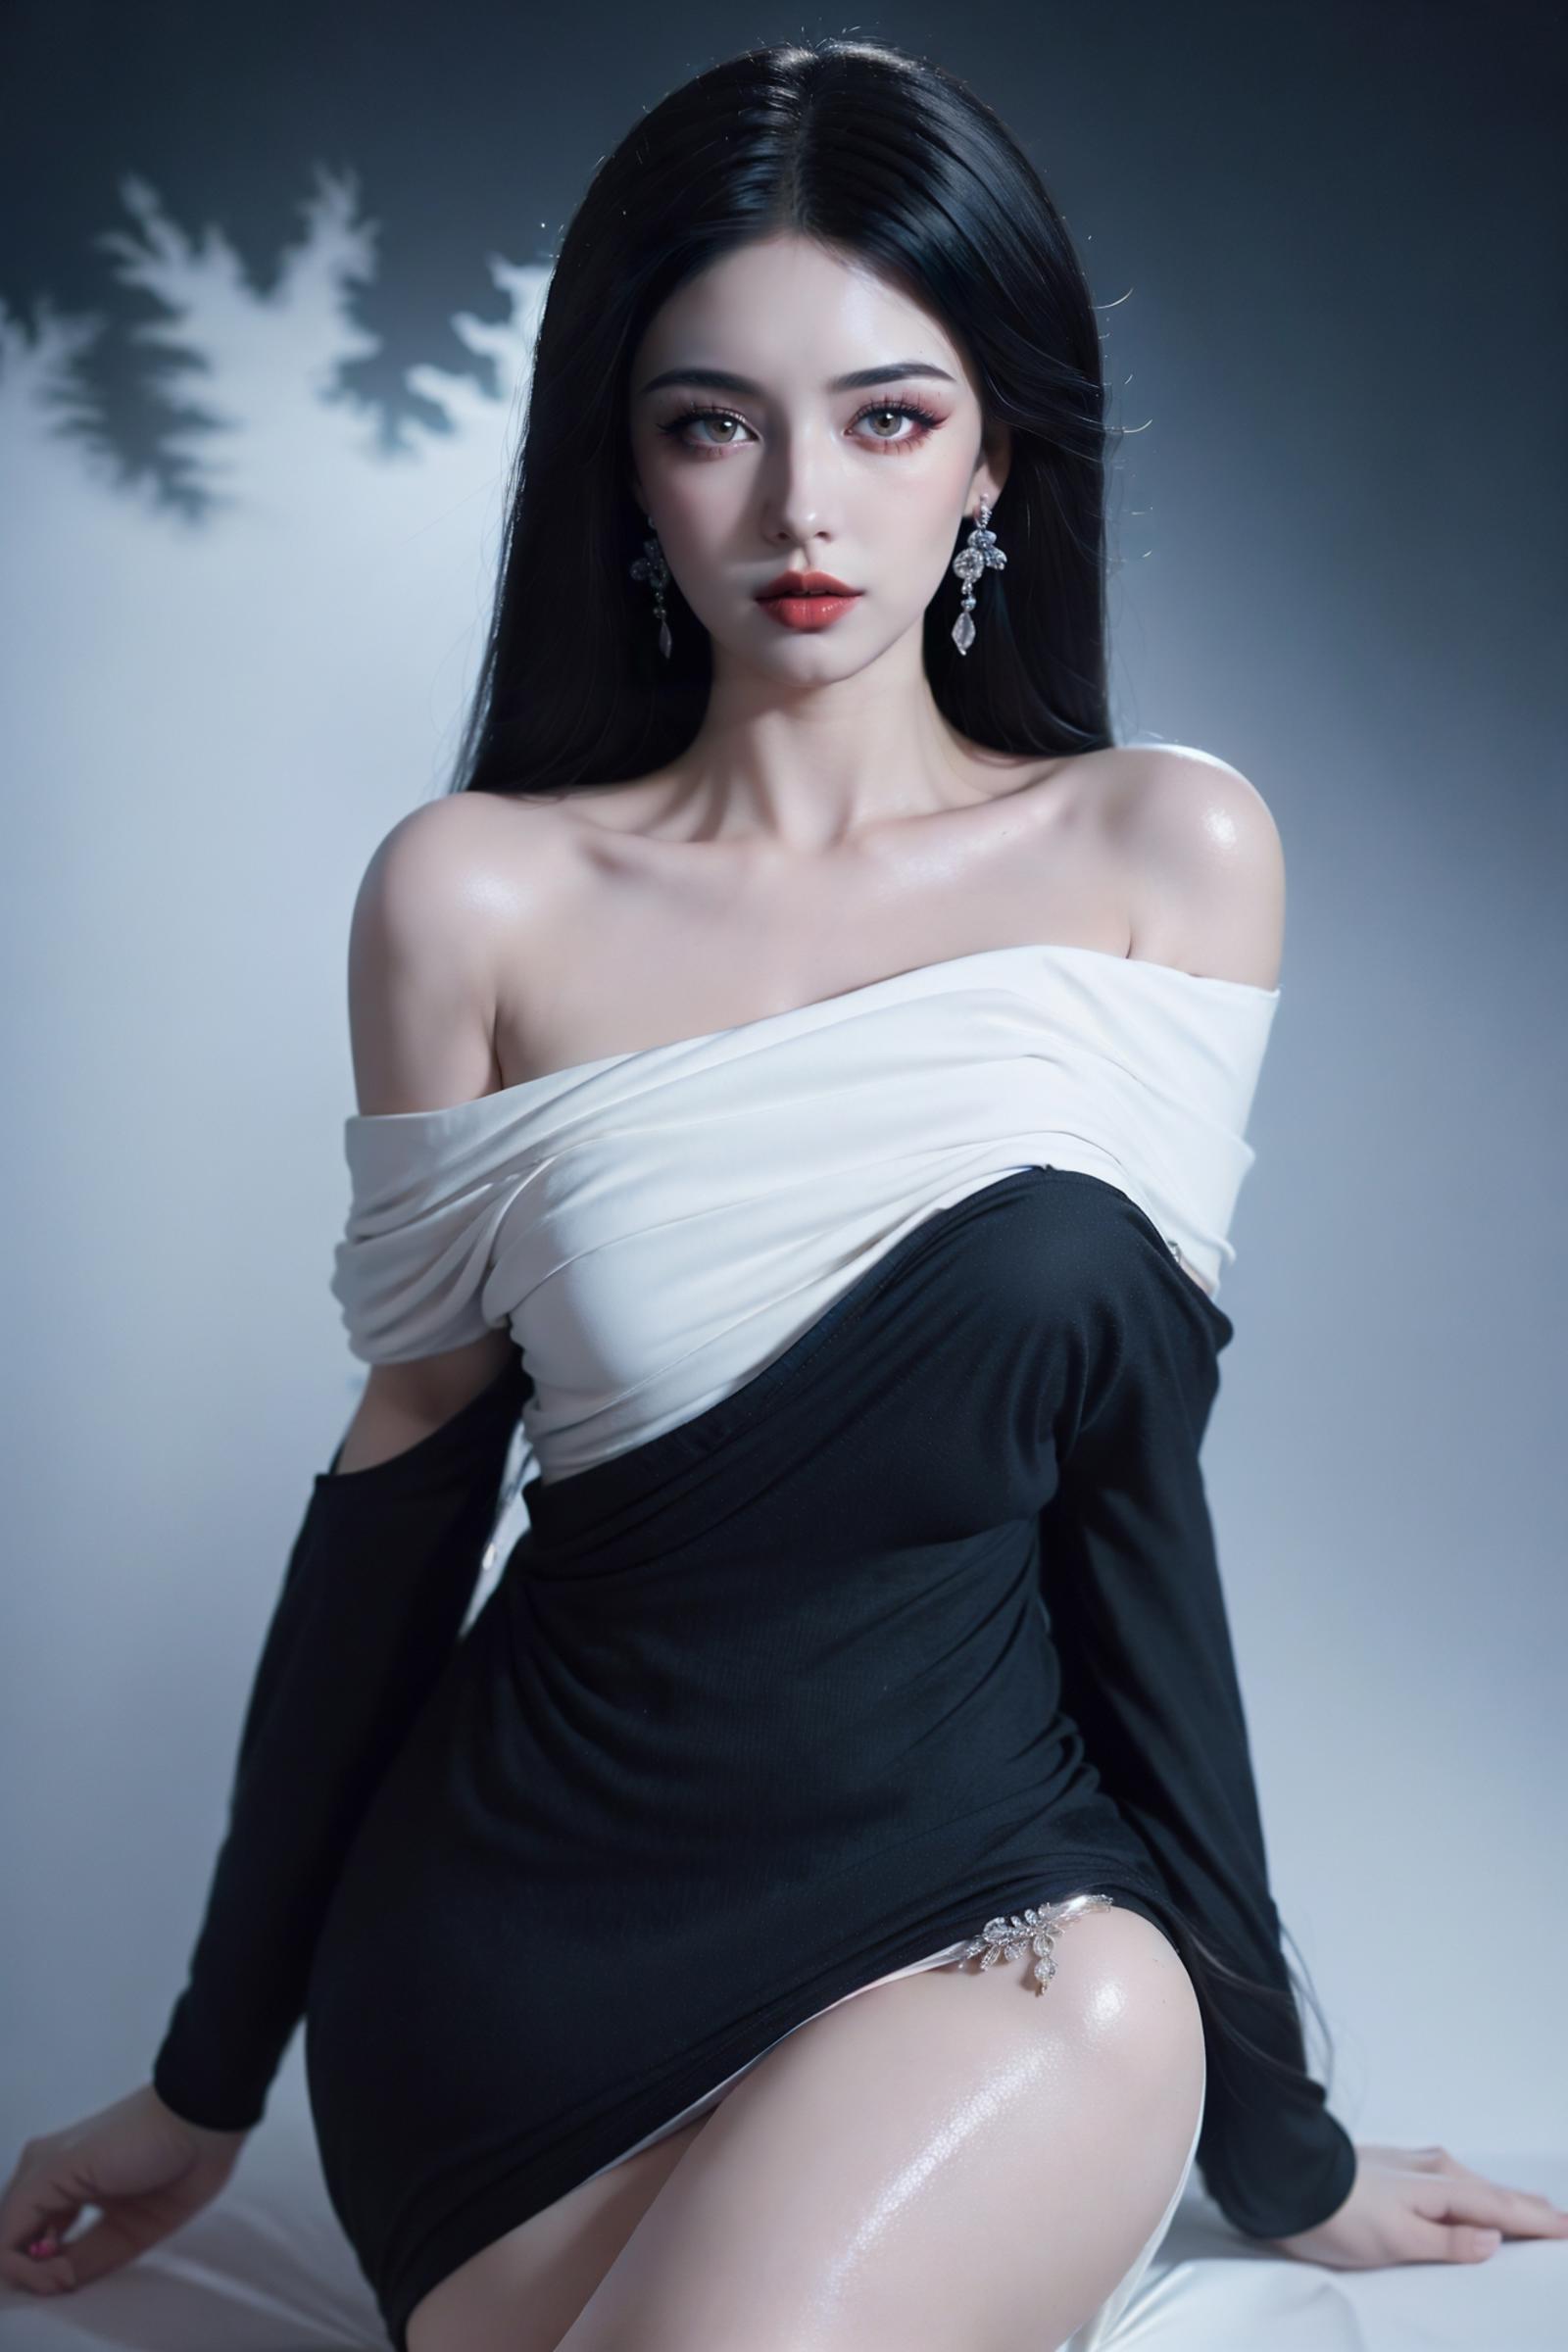 绪儿-带妆容脸模Face model with makeup image by XRYCJ